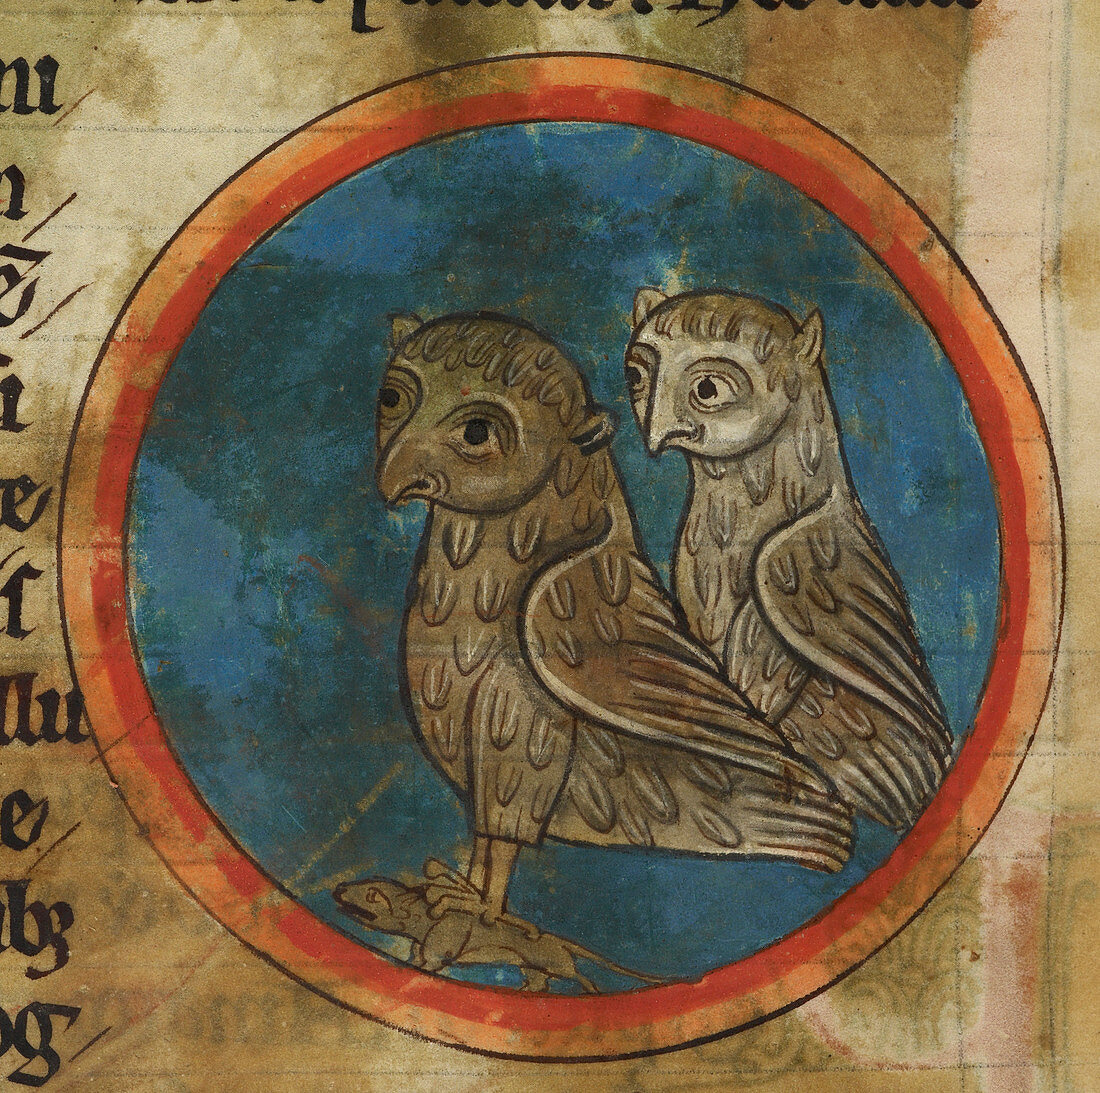 Little Owl and Eagle Owl